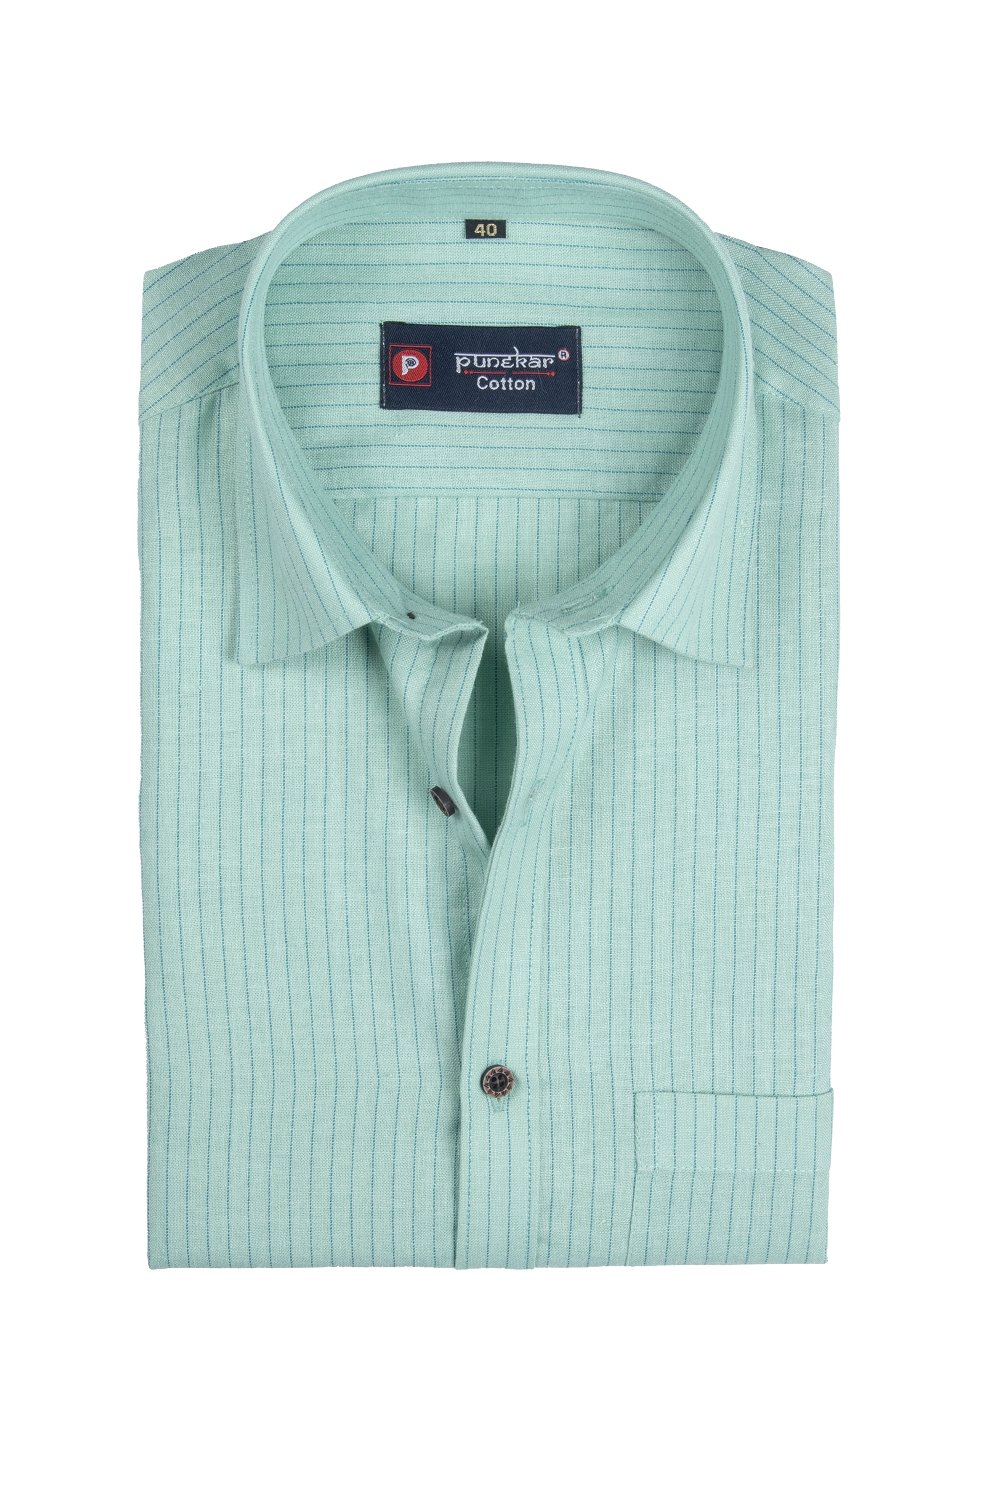 Punekar Cotton Mint Color Linning Criss Cross Woven Cotton Shirt for Men&